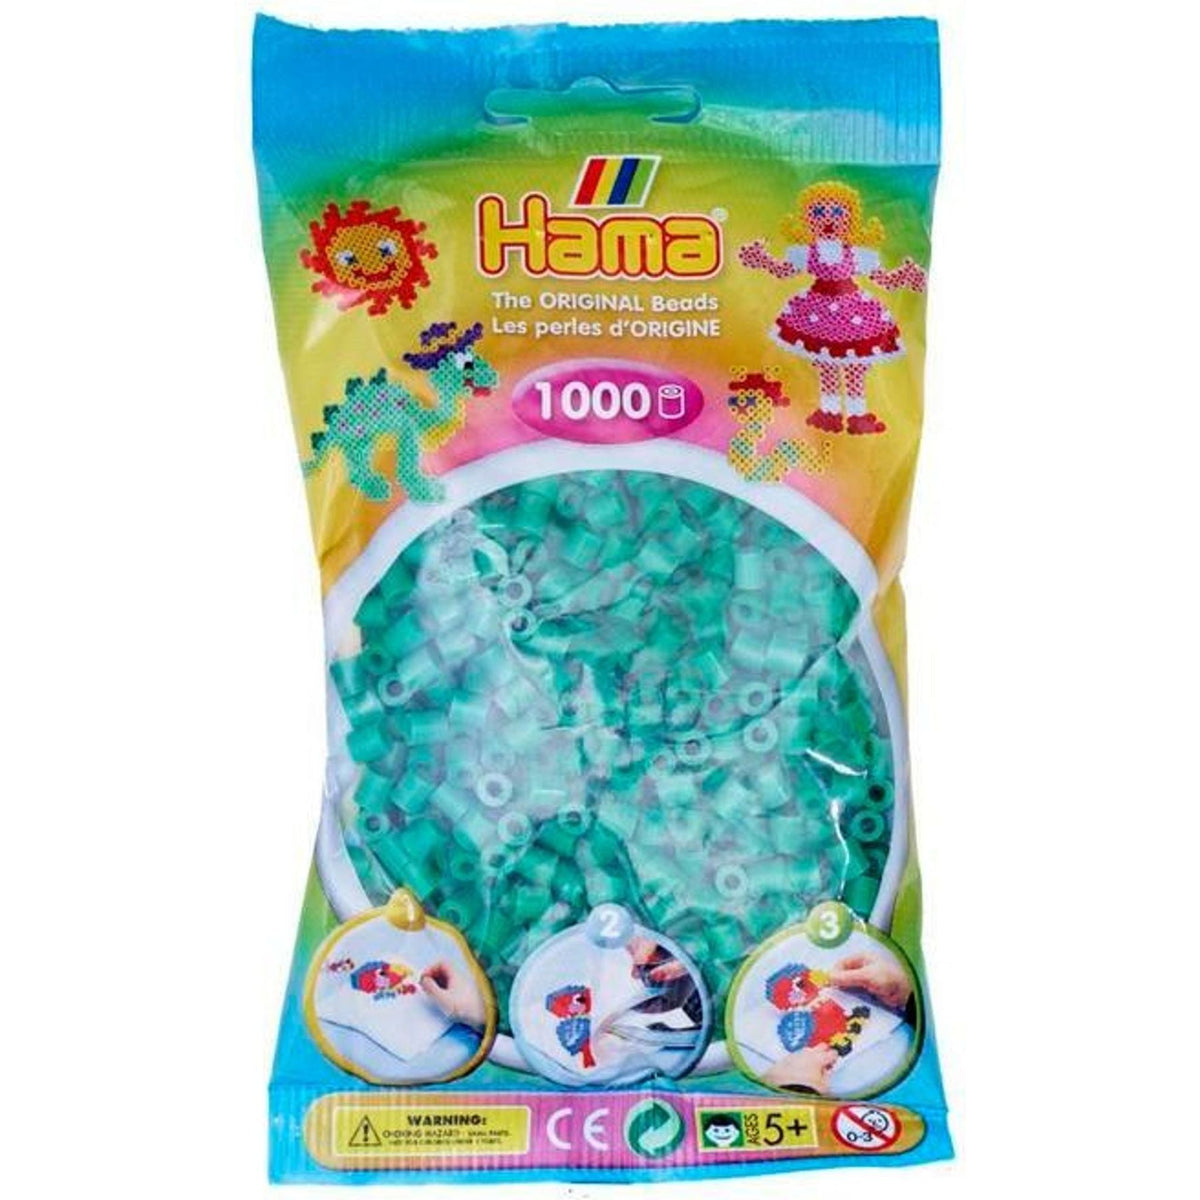 Hama Beads - 1000 Bead Pack (14 variants) - Toybox Tales